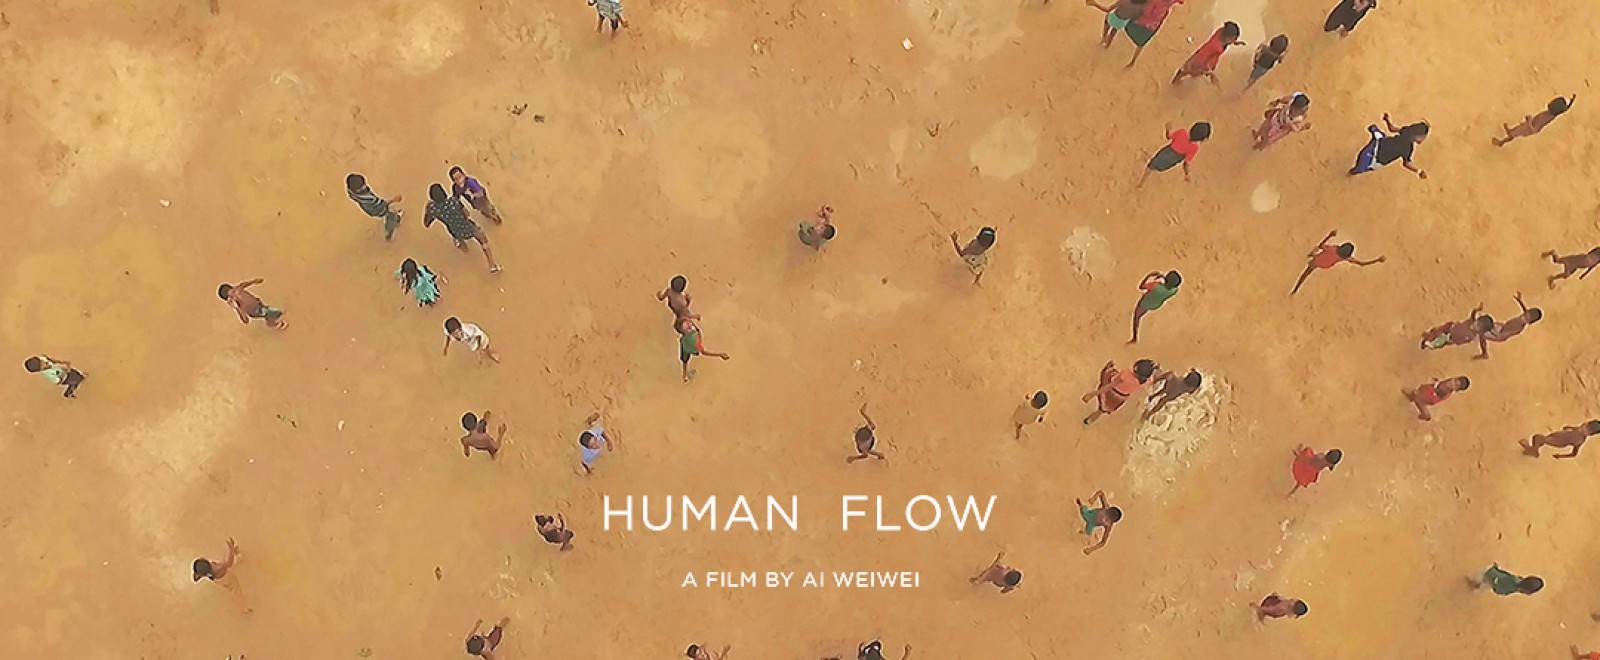 HUMAN FLOW trailer